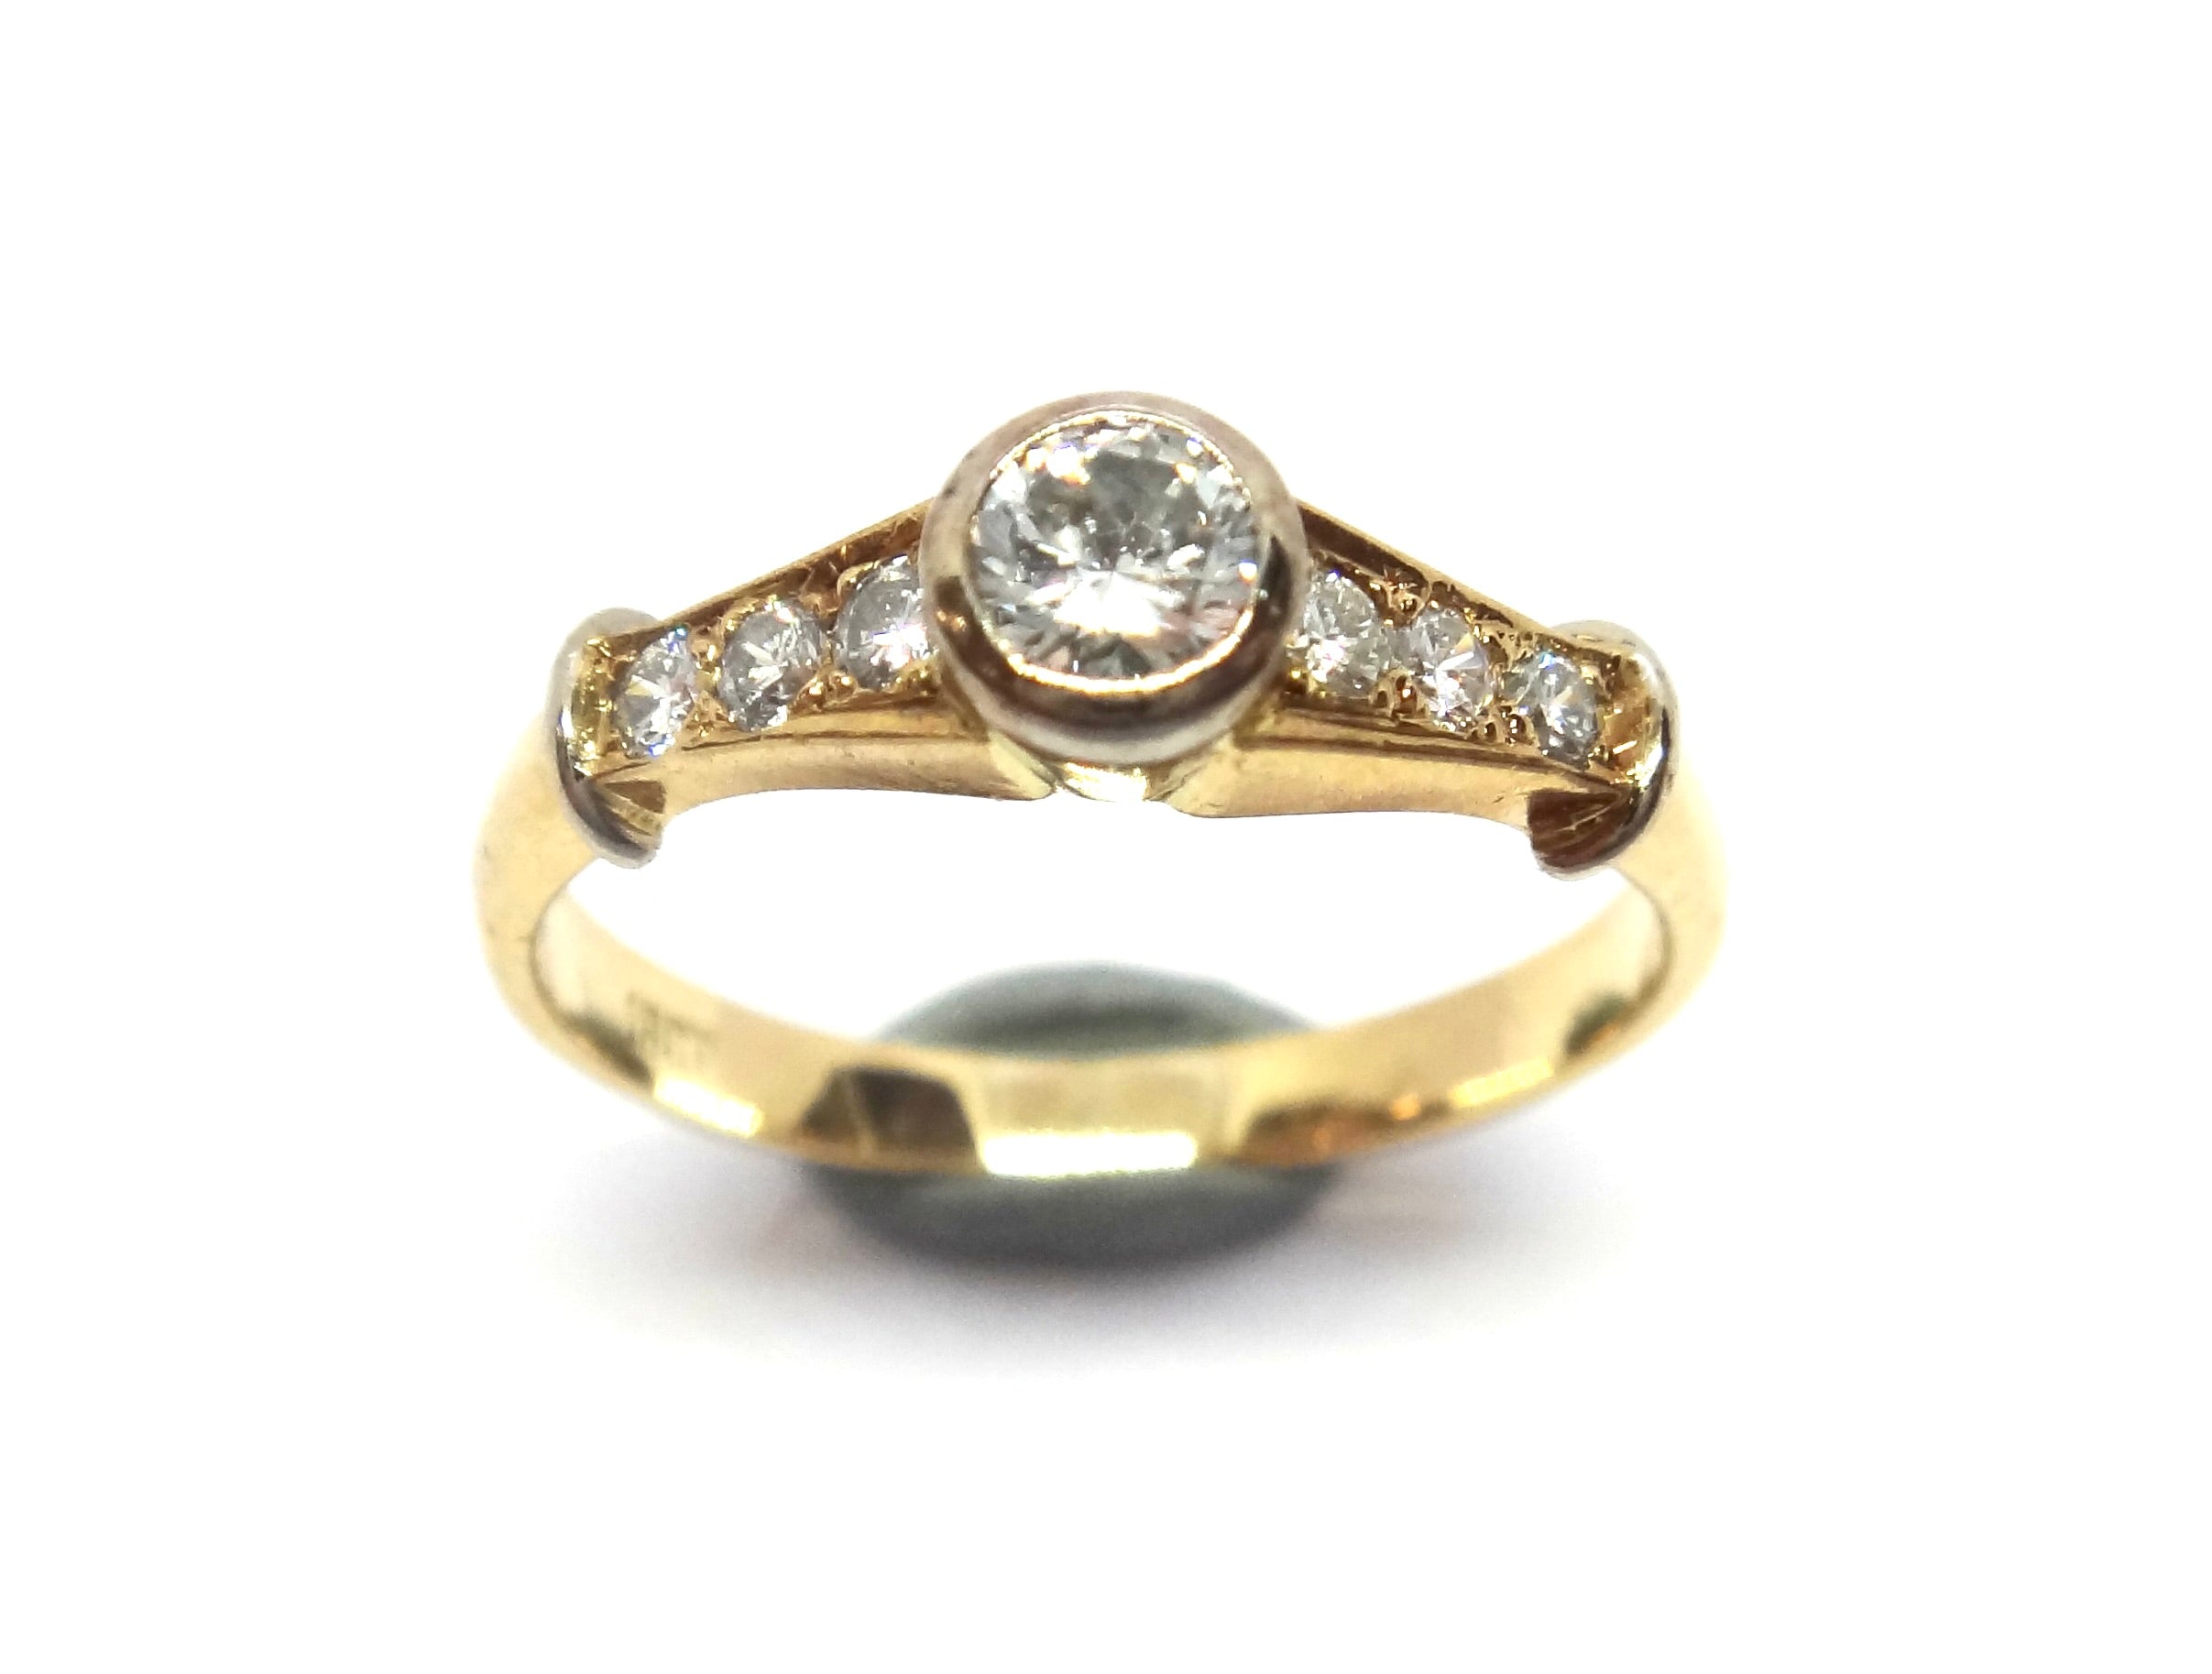 18ct Yellow Gold & DIAMOND Ring VAL $3,025